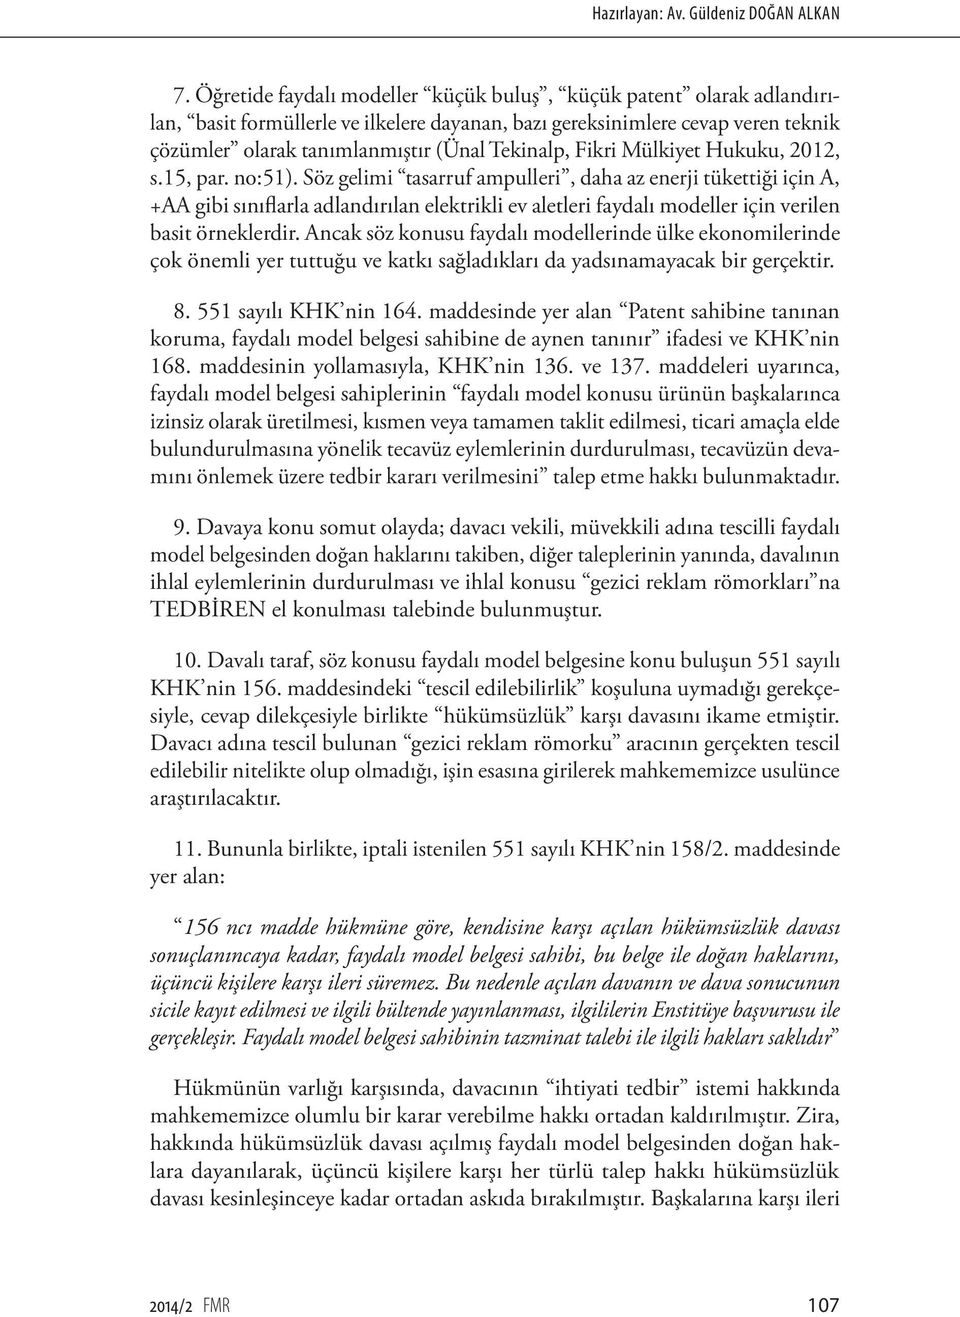 Fikri Mülkiyet Hukuku, 2012, s.15, par. no:51).